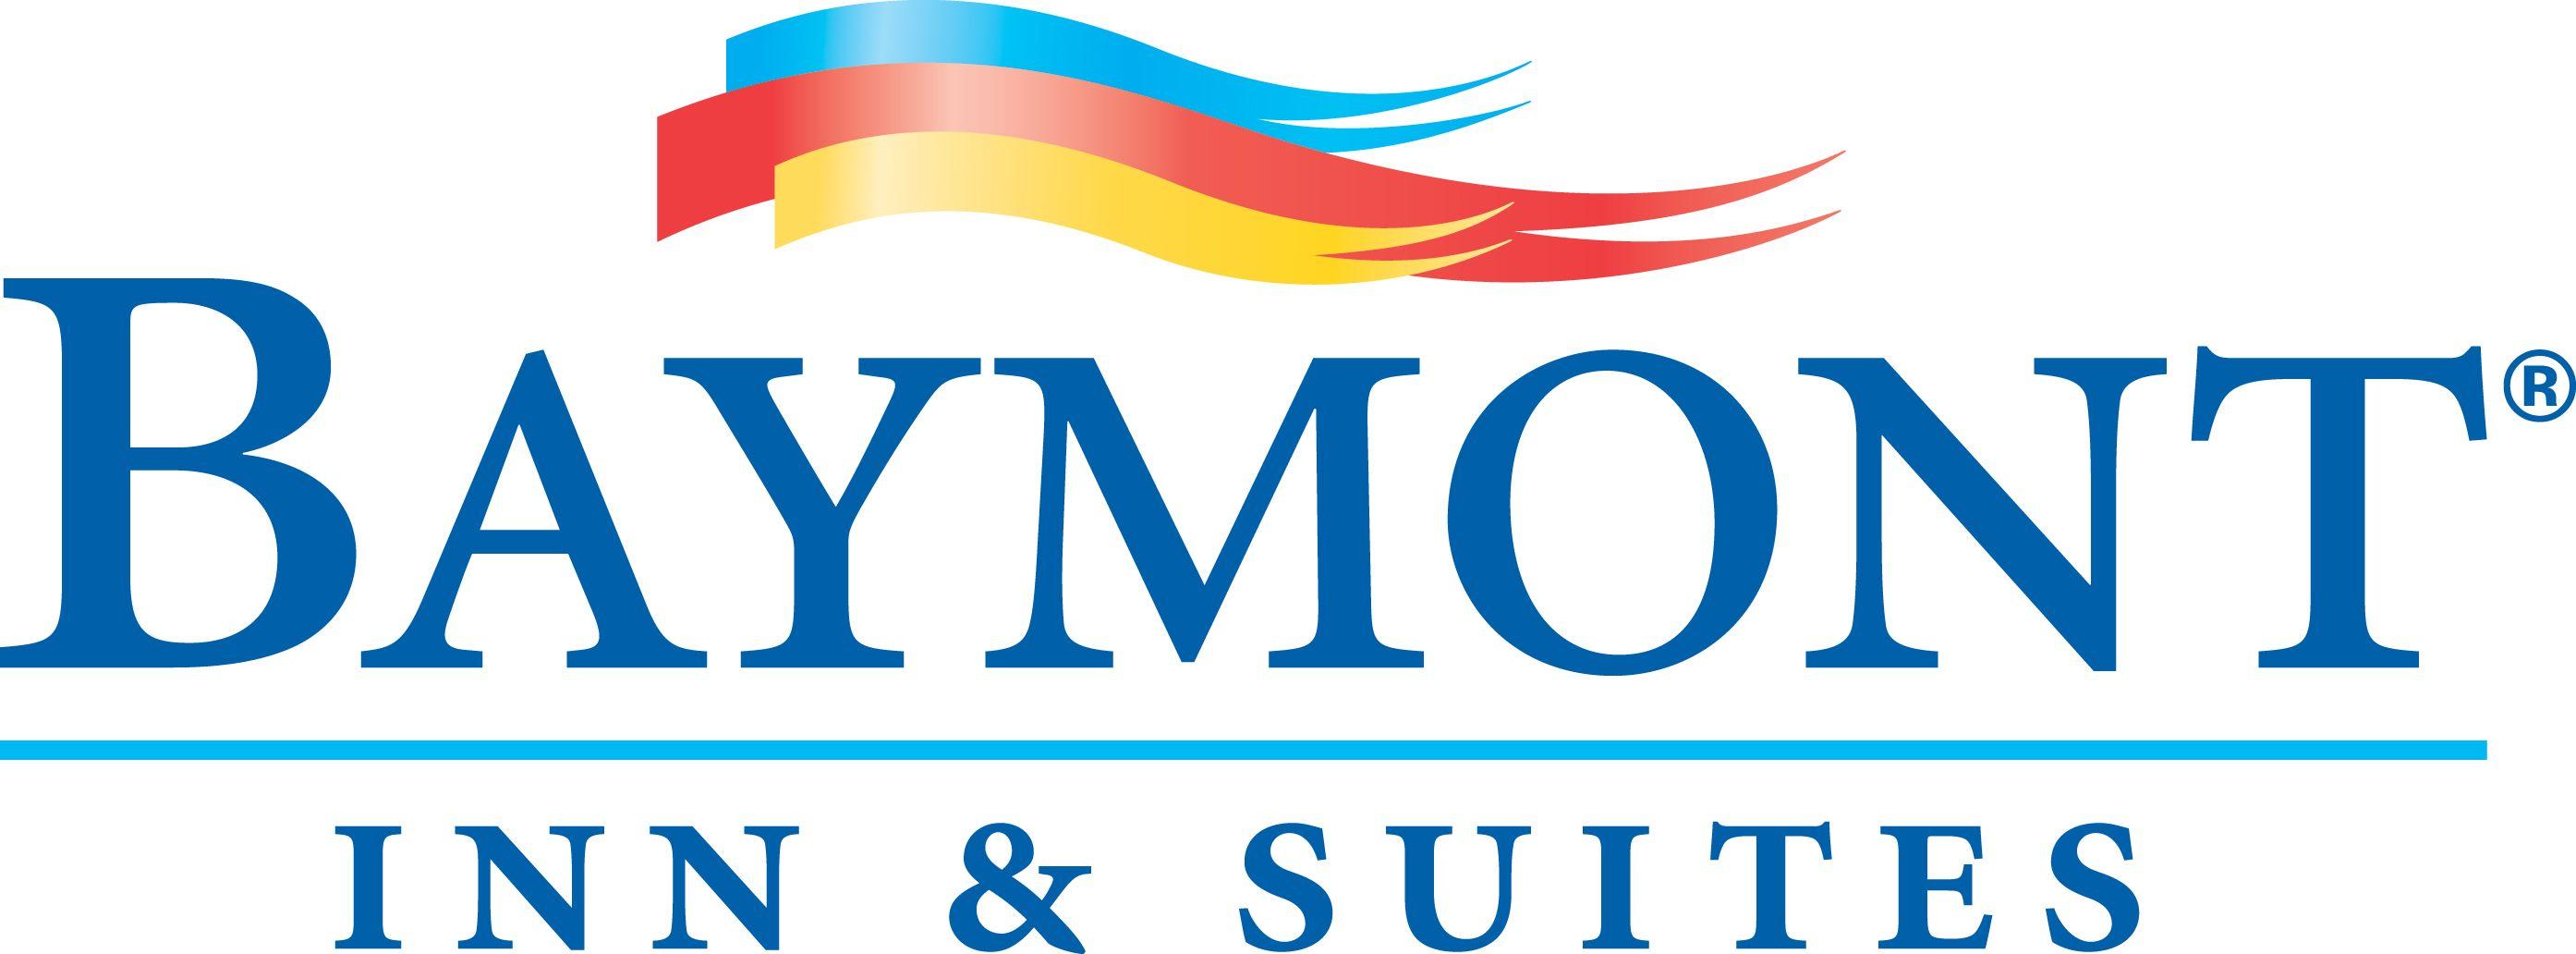 Hotel Inn Logo - Baymont Inn & Suites Logo | Wyndham Destinations